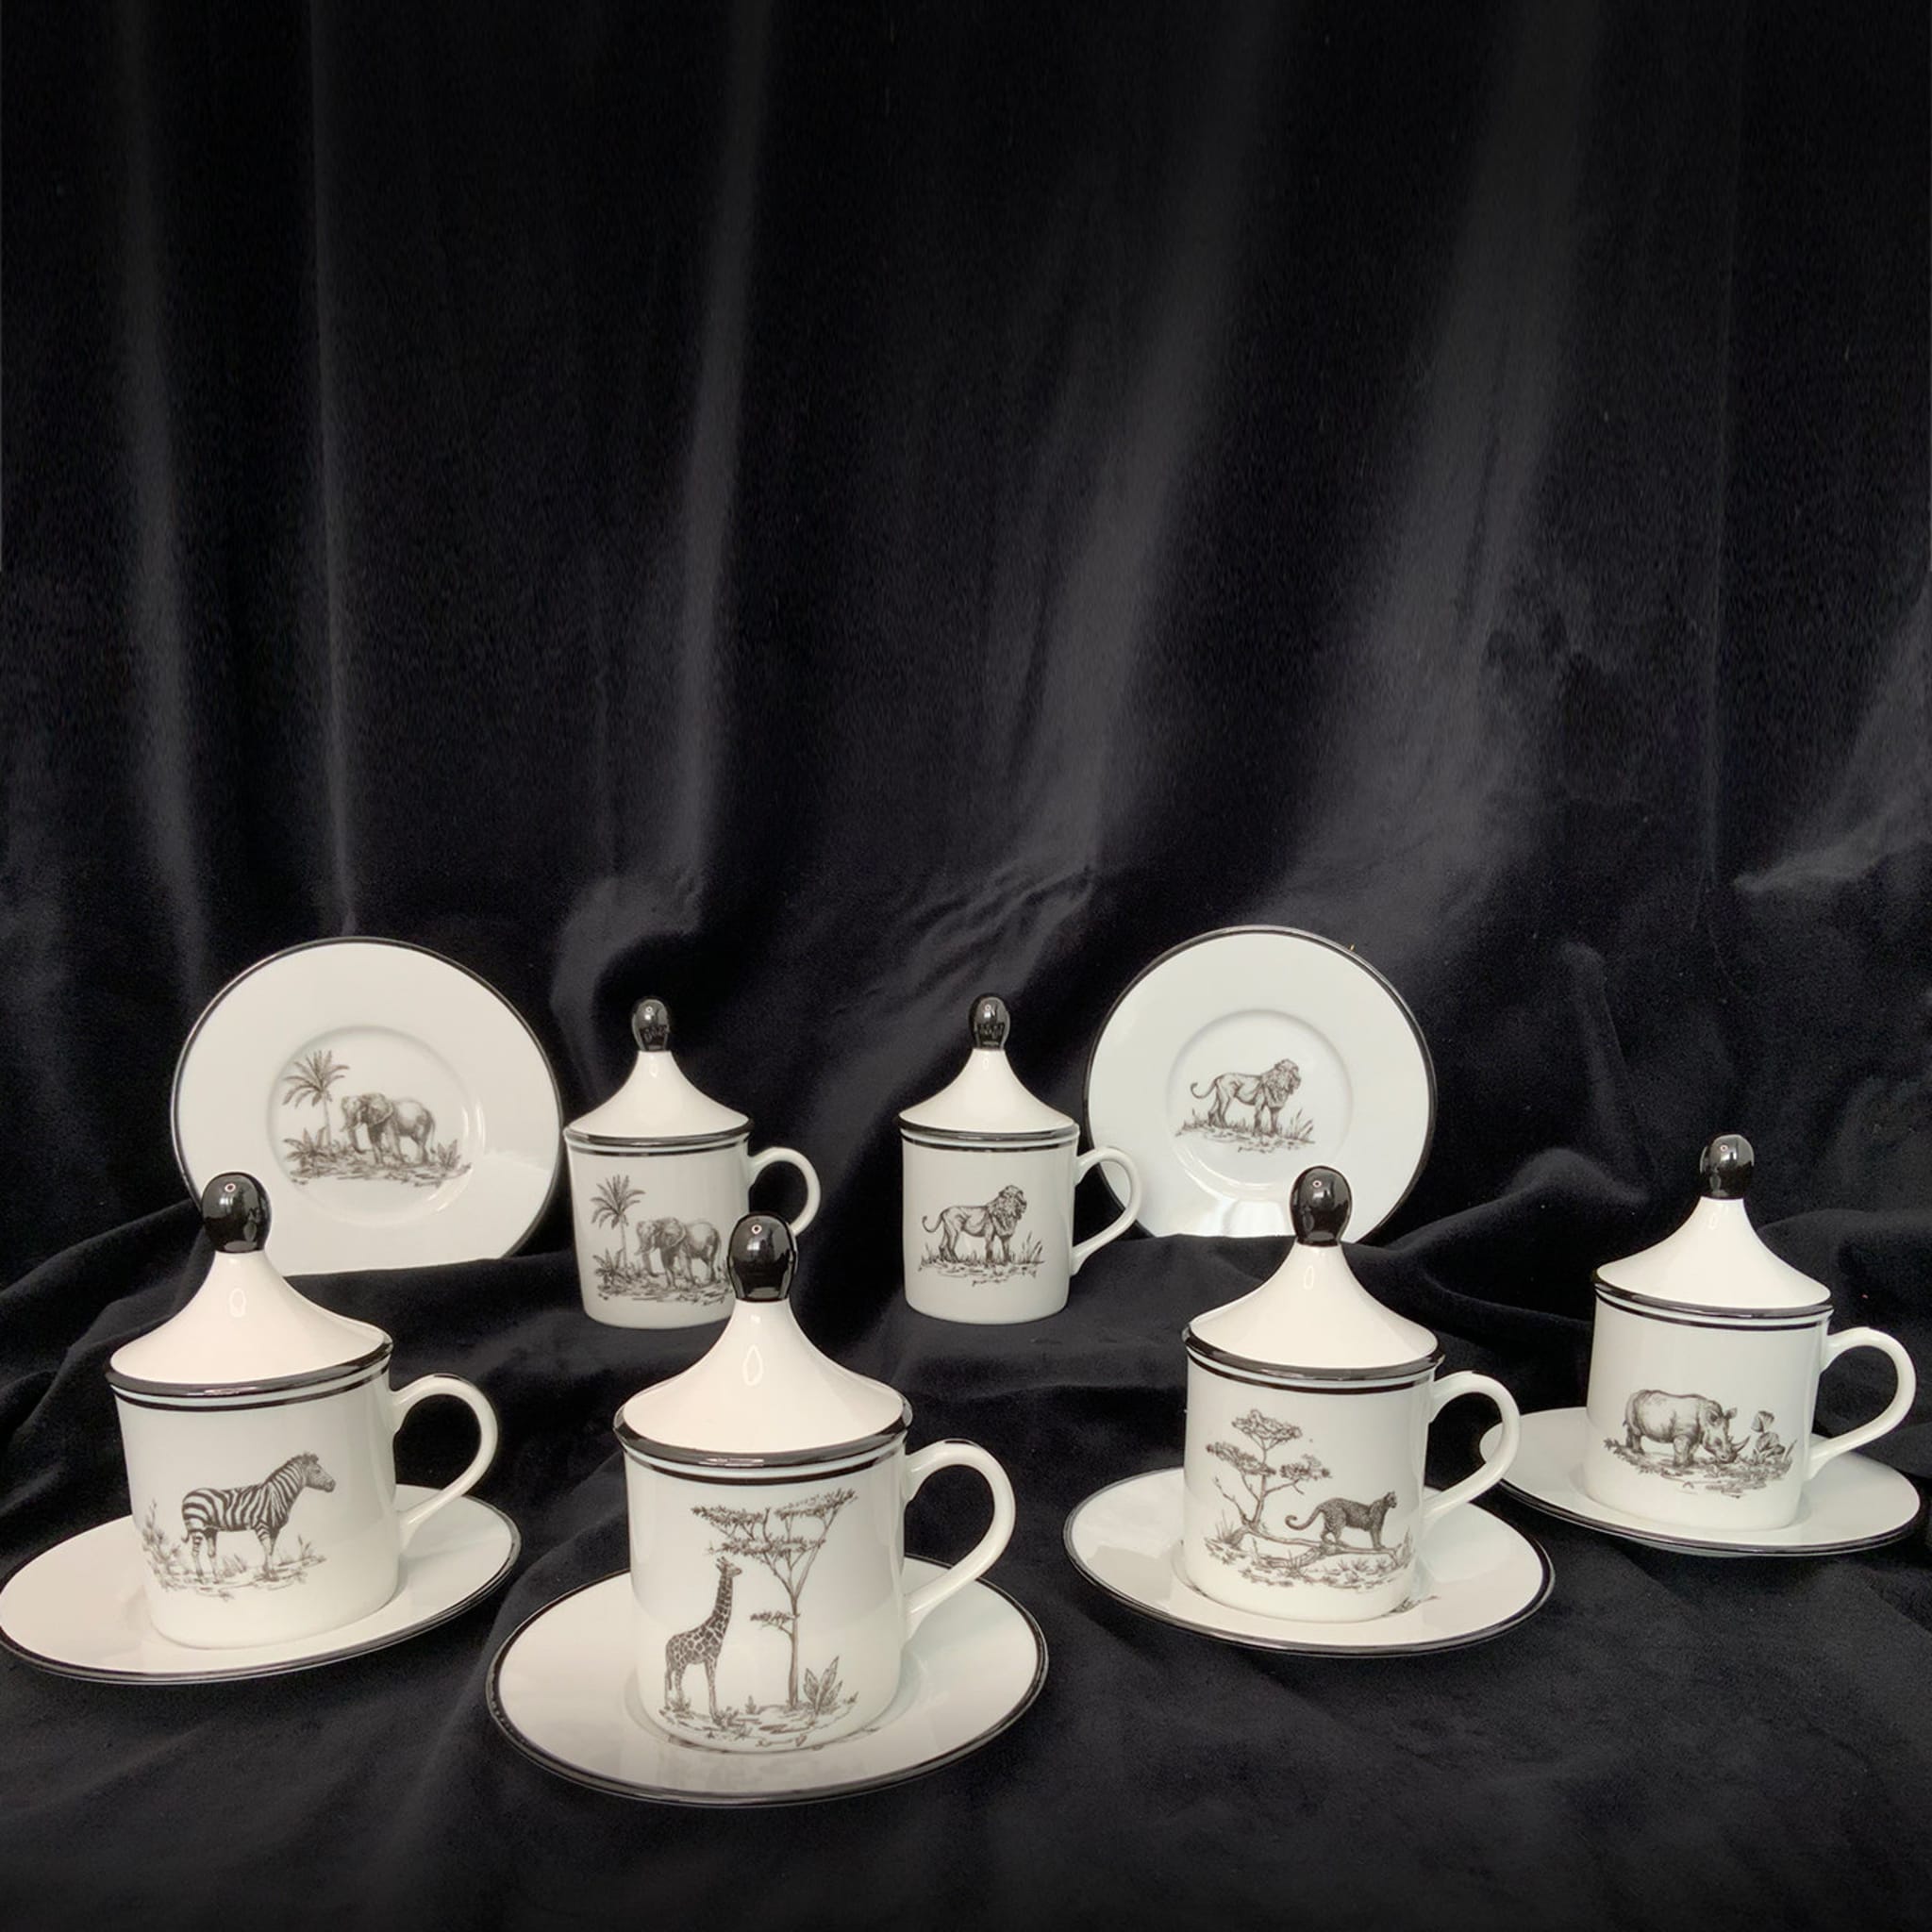 Set of 6 Savana Espresso Cups - Alternative view 2